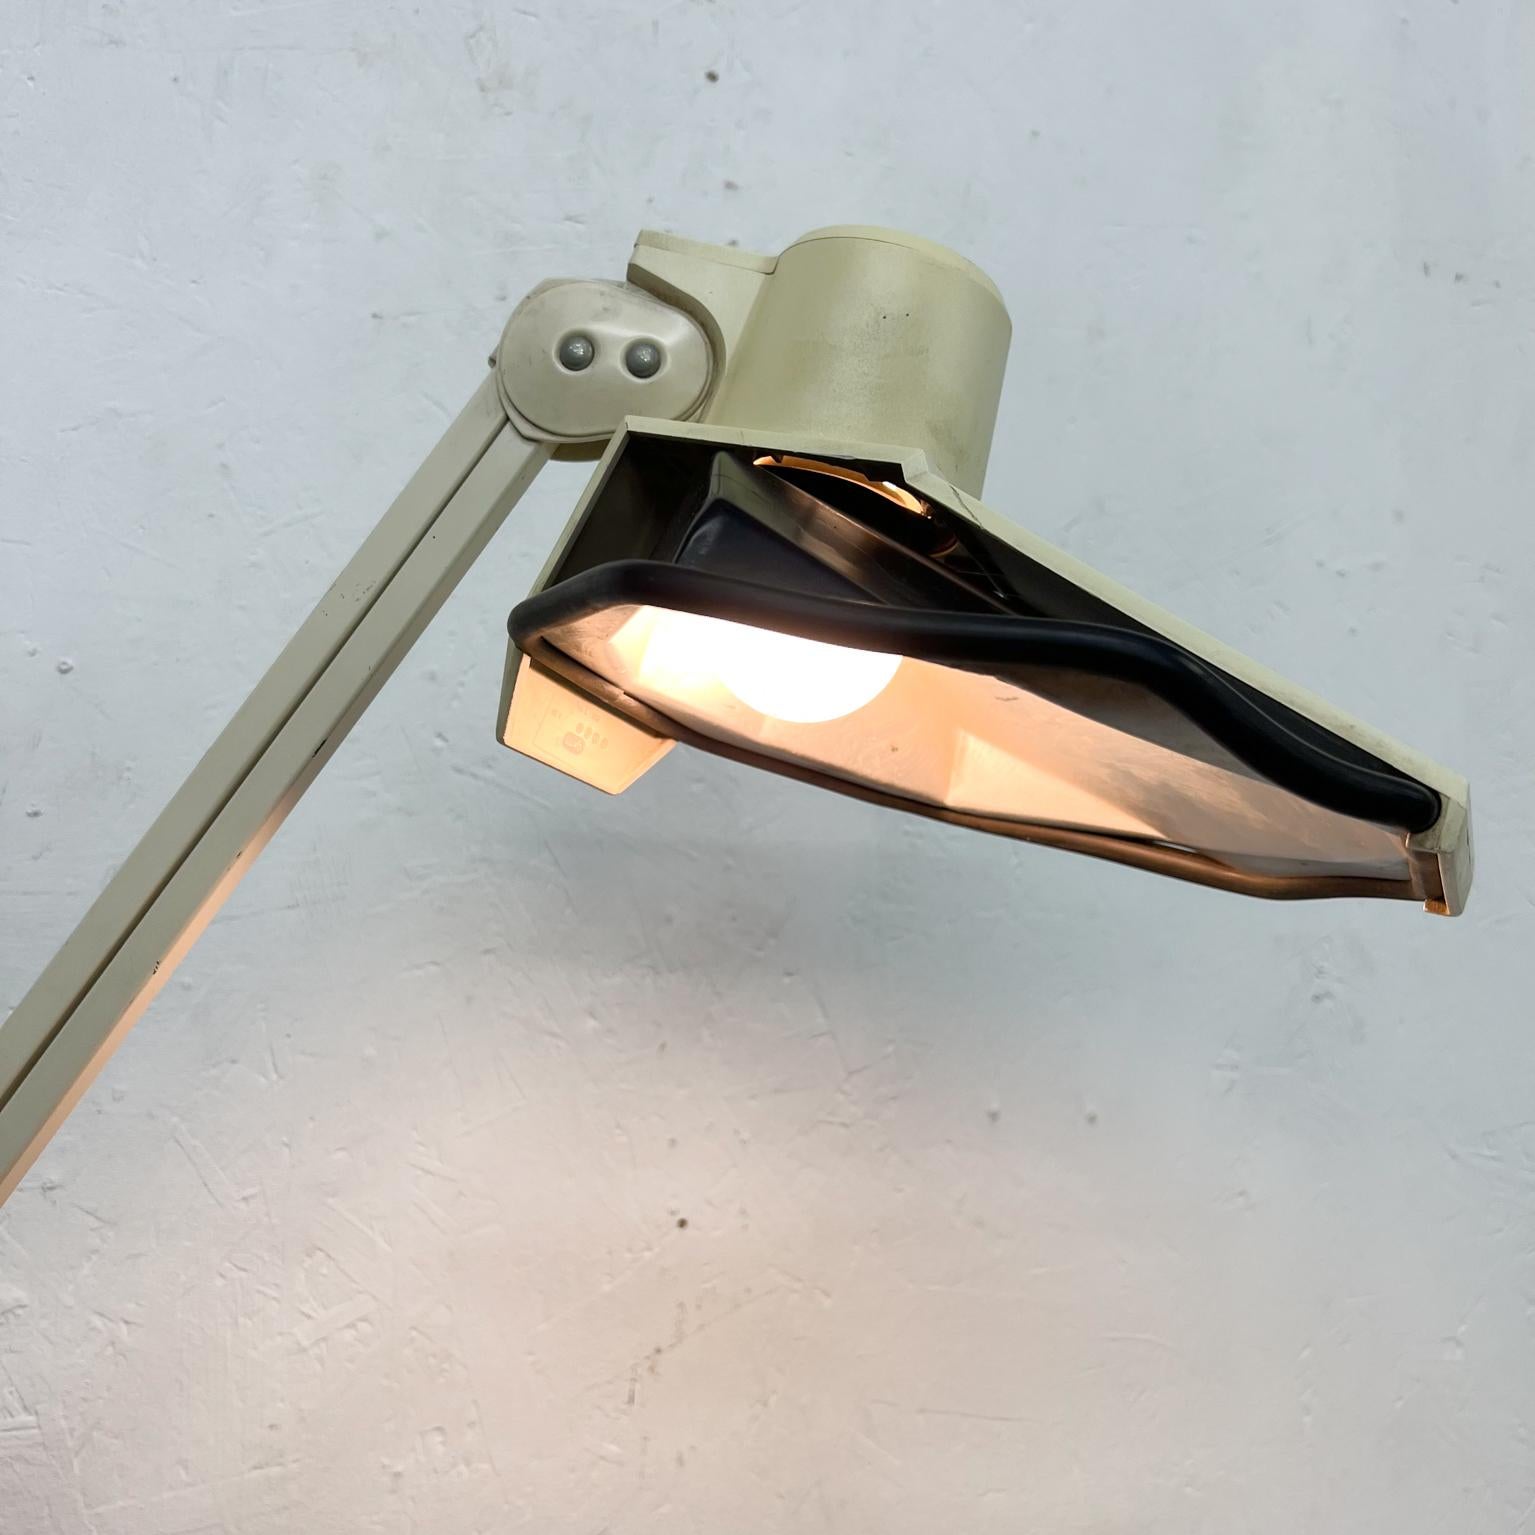 1970s LUXO Architect Rare Vintage Task Clamp Lamp for Desk Jac Jacobsen For Sale 4